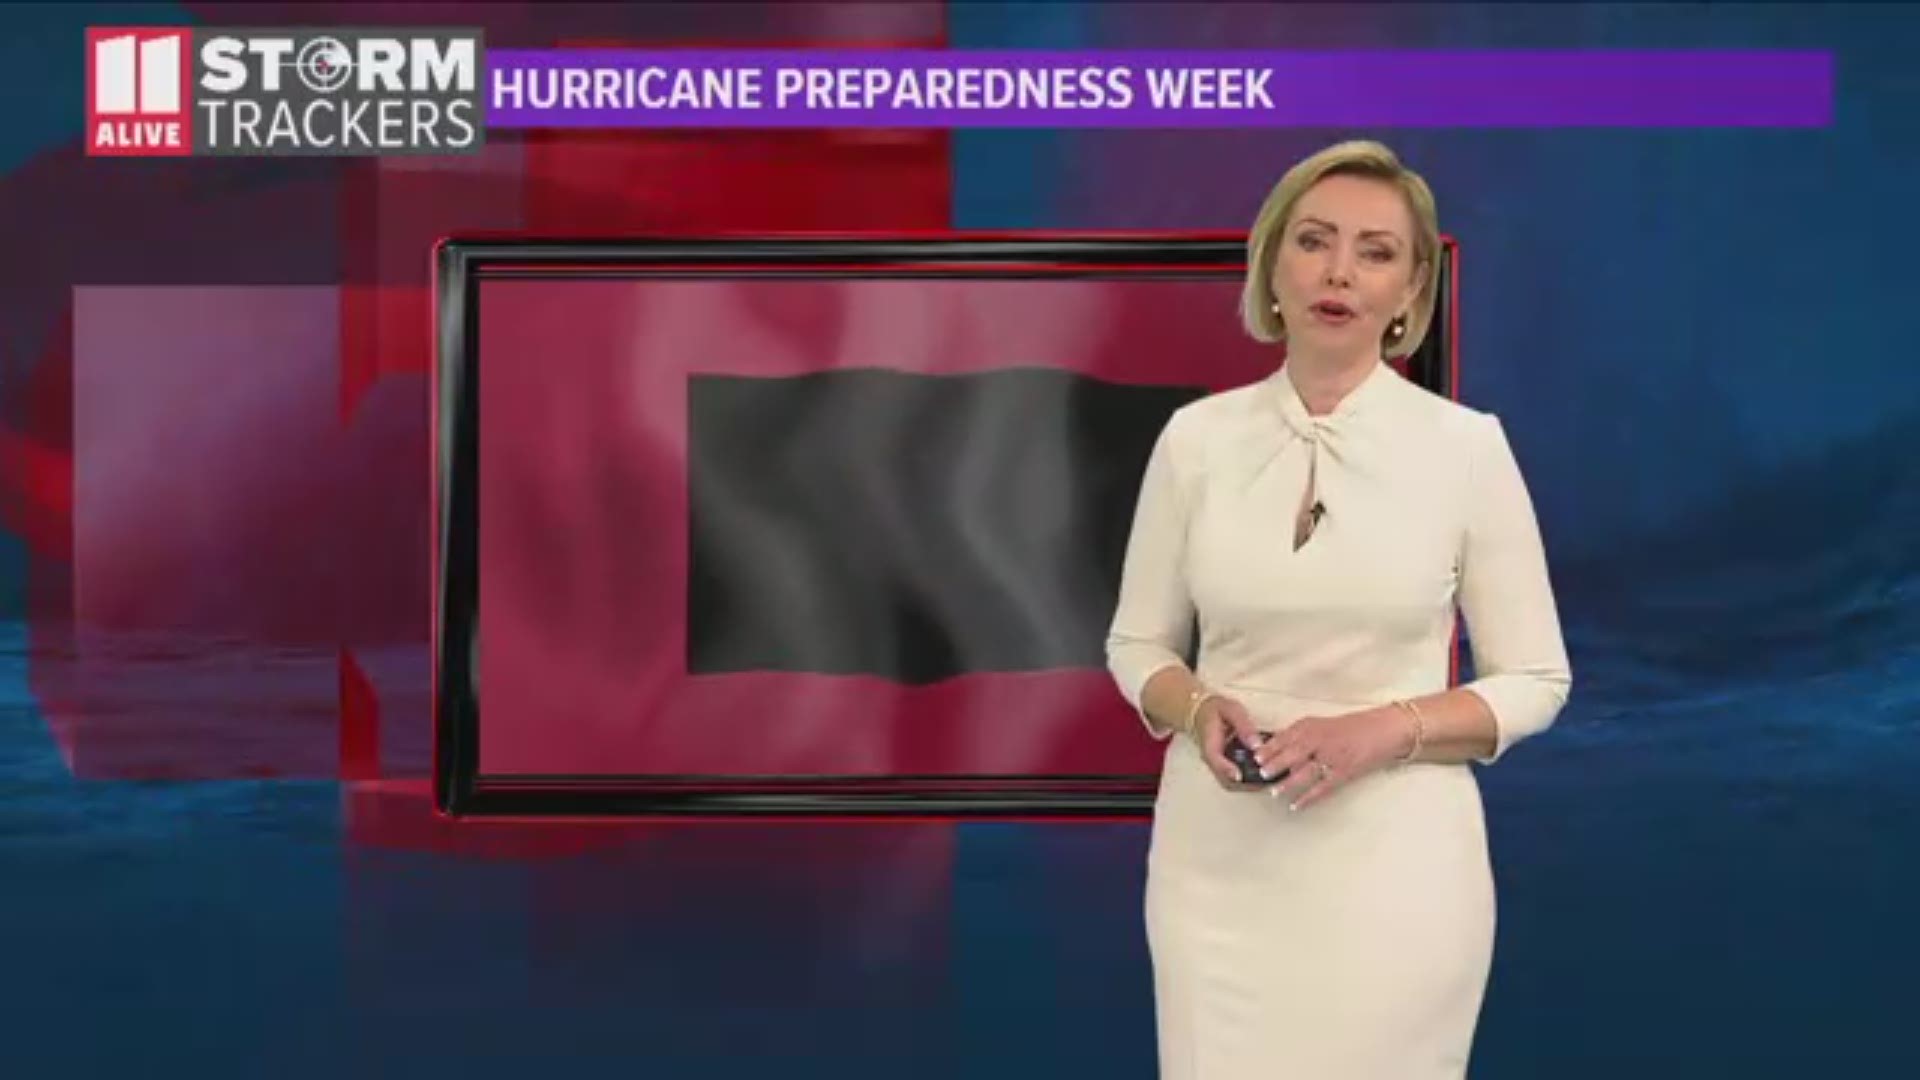 It's Hurricane Preparedness Week. Hurricane season starts June 1.